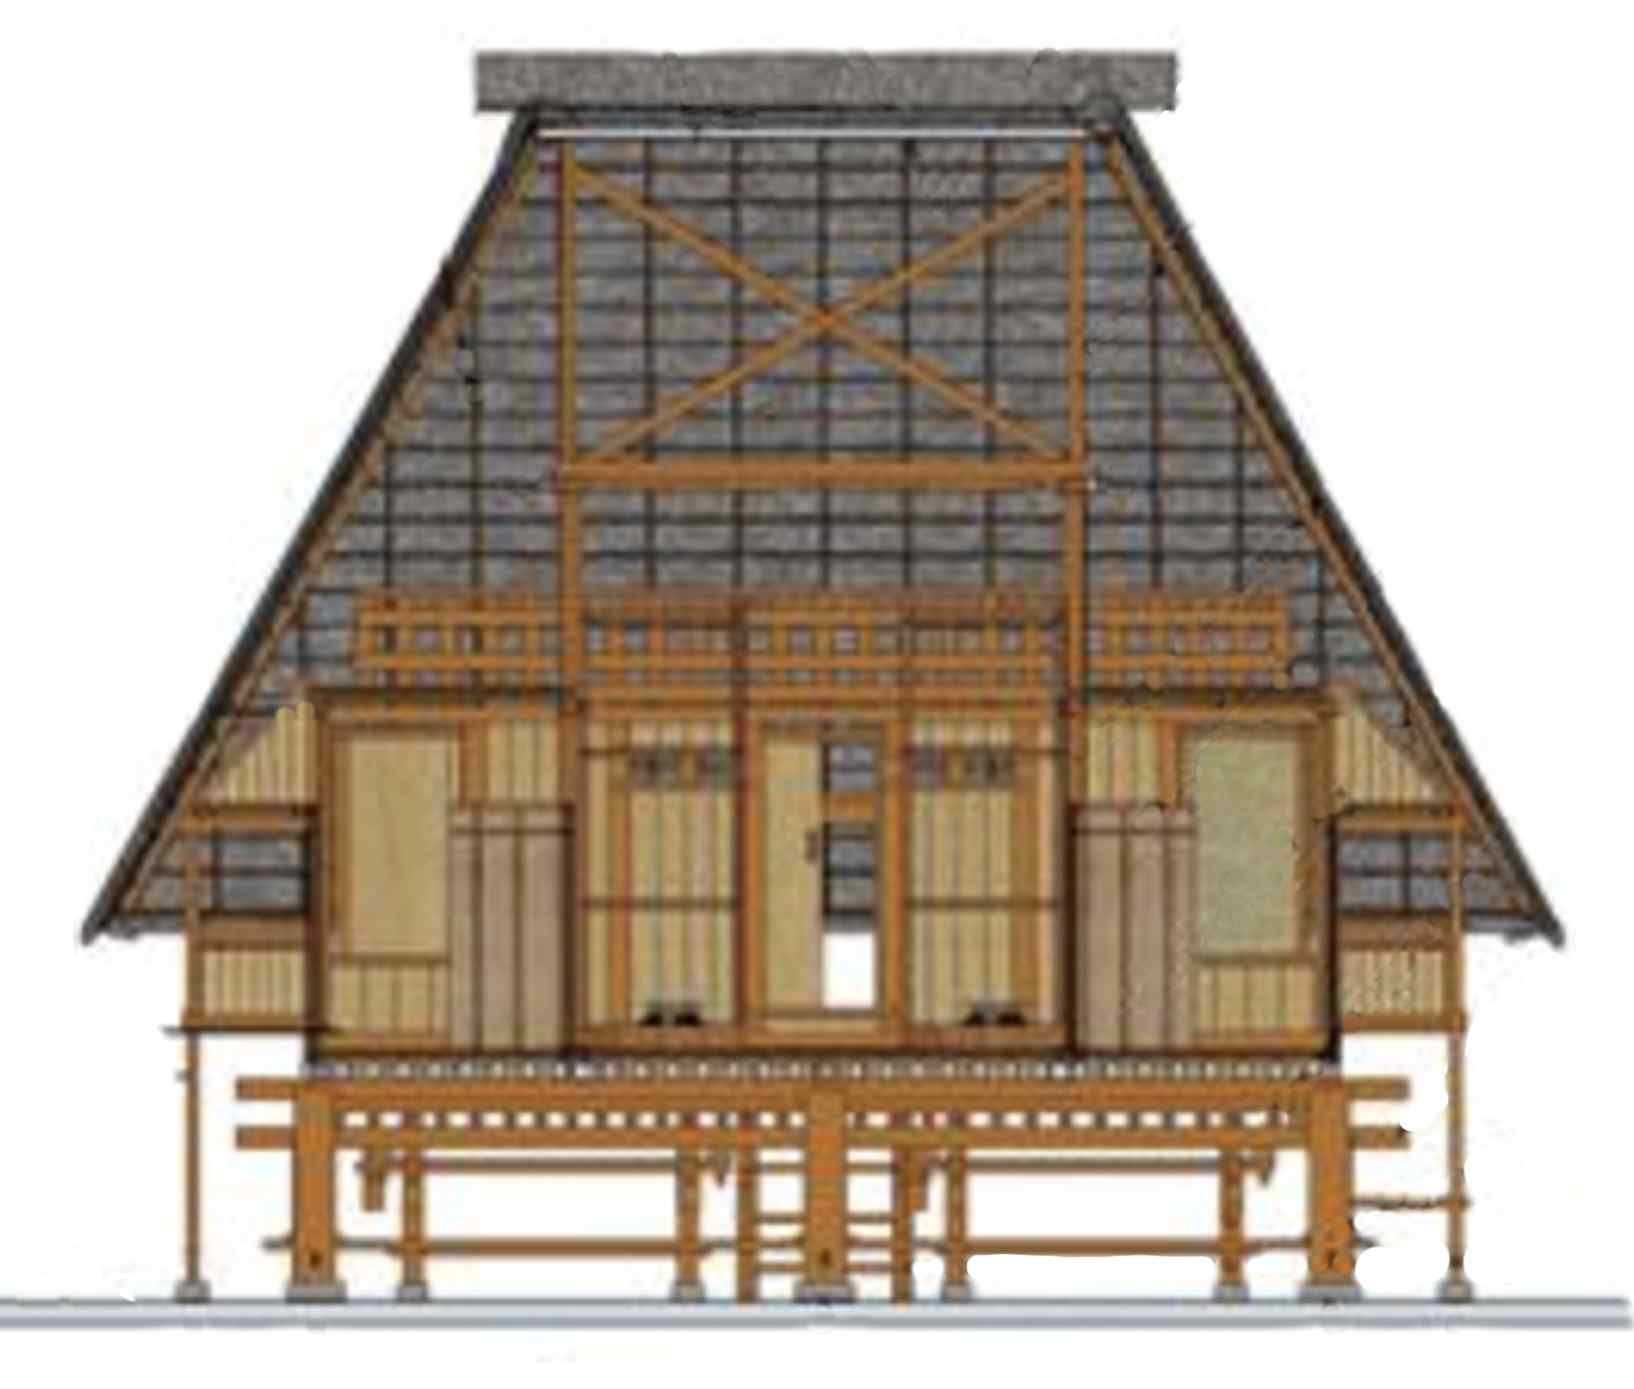 Description: The timber frame structure of a sa'o nggua